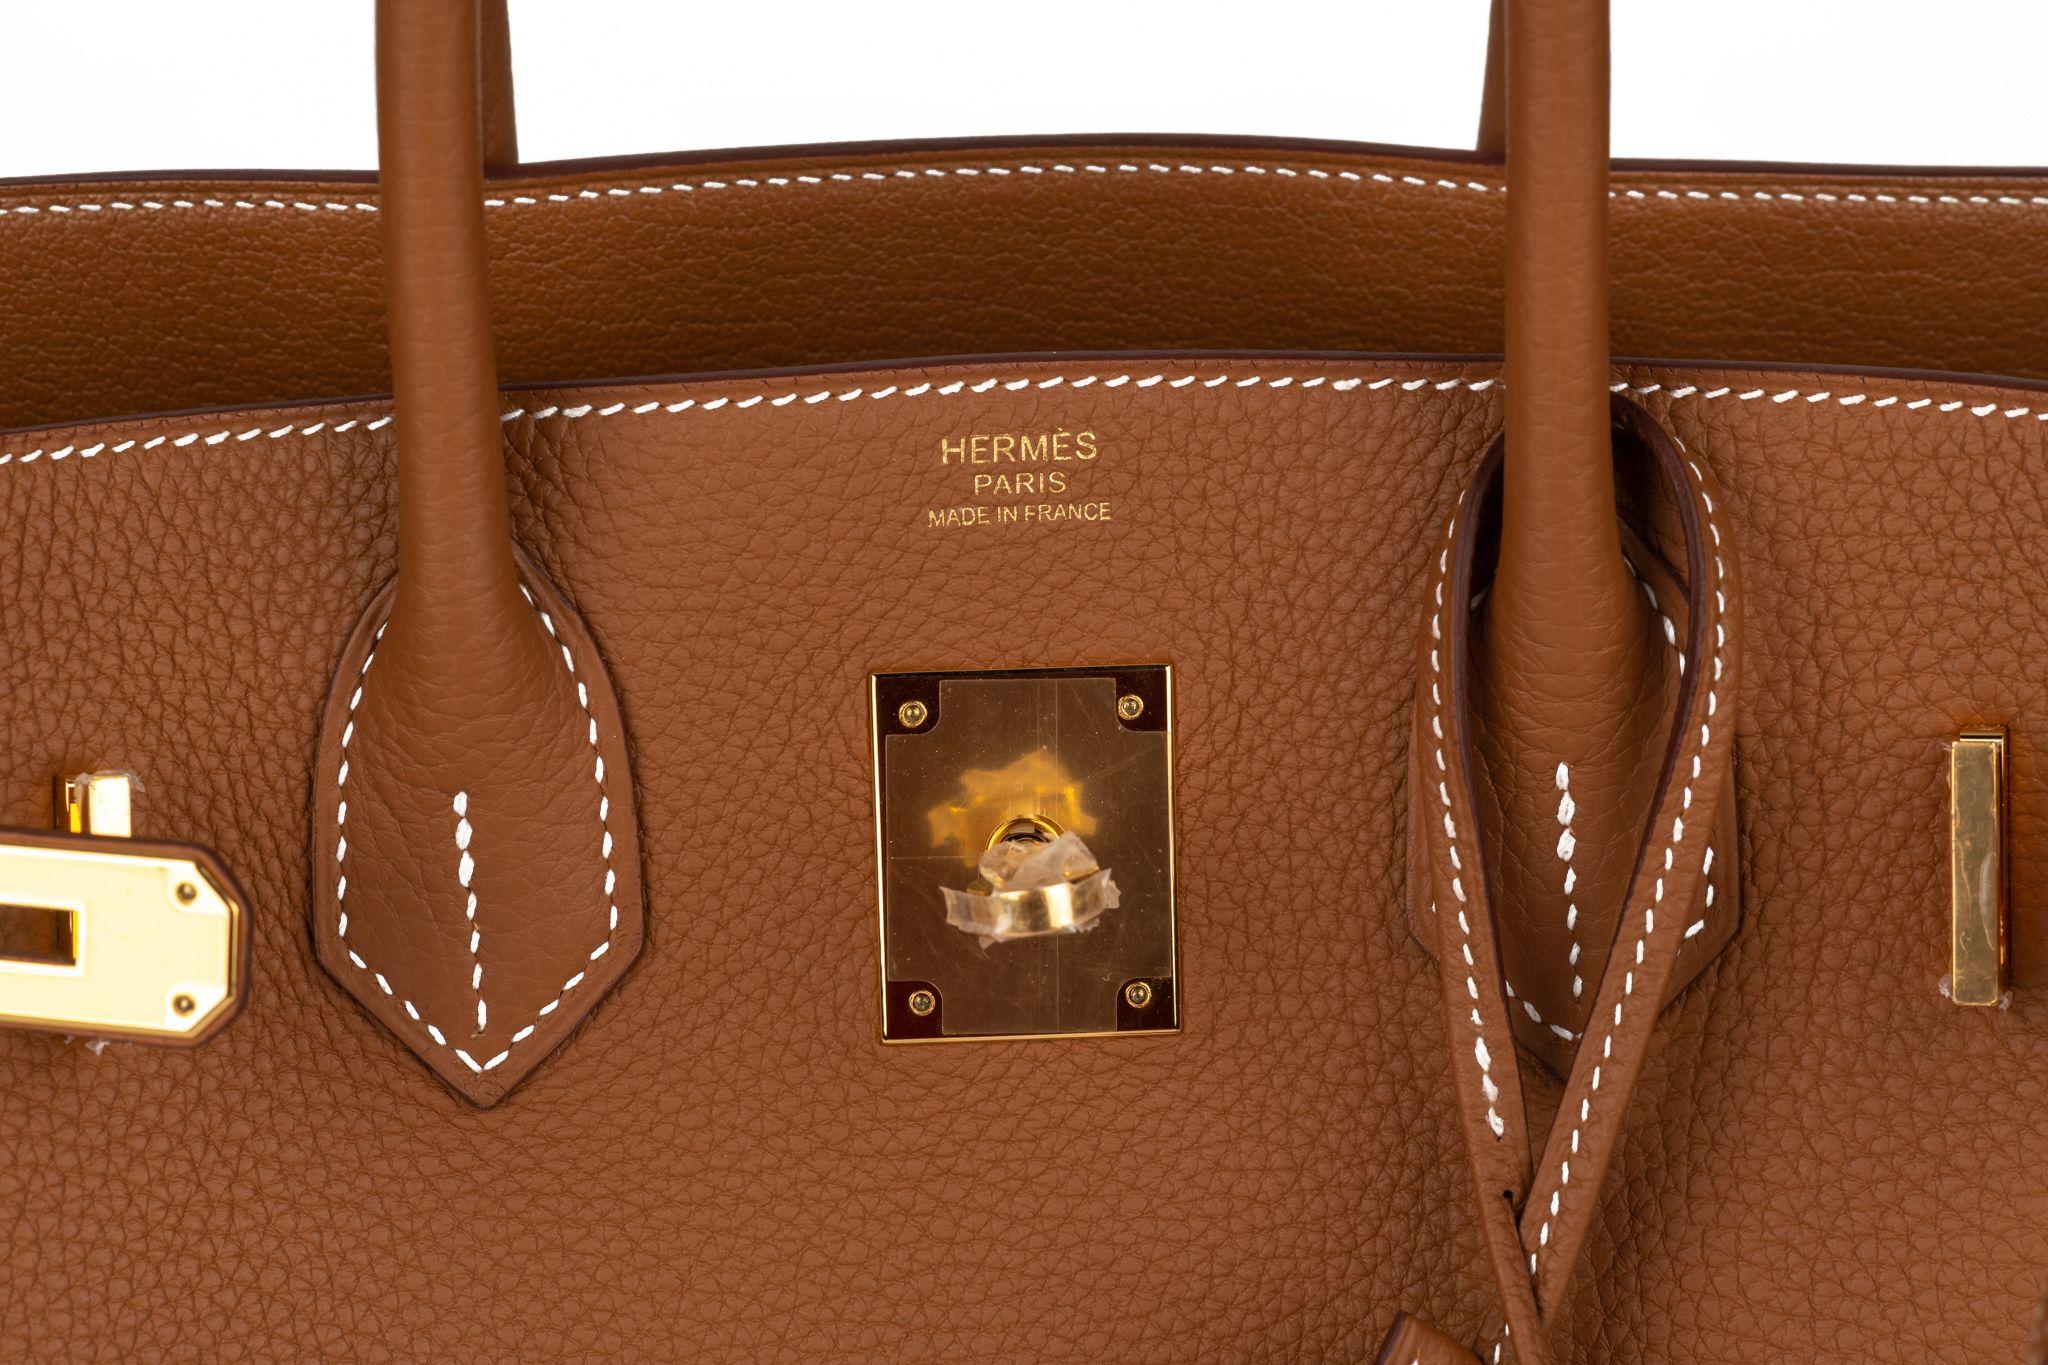 Hermès BNIB Birkin 30 3 in 1 Bag Gold For Sale 1